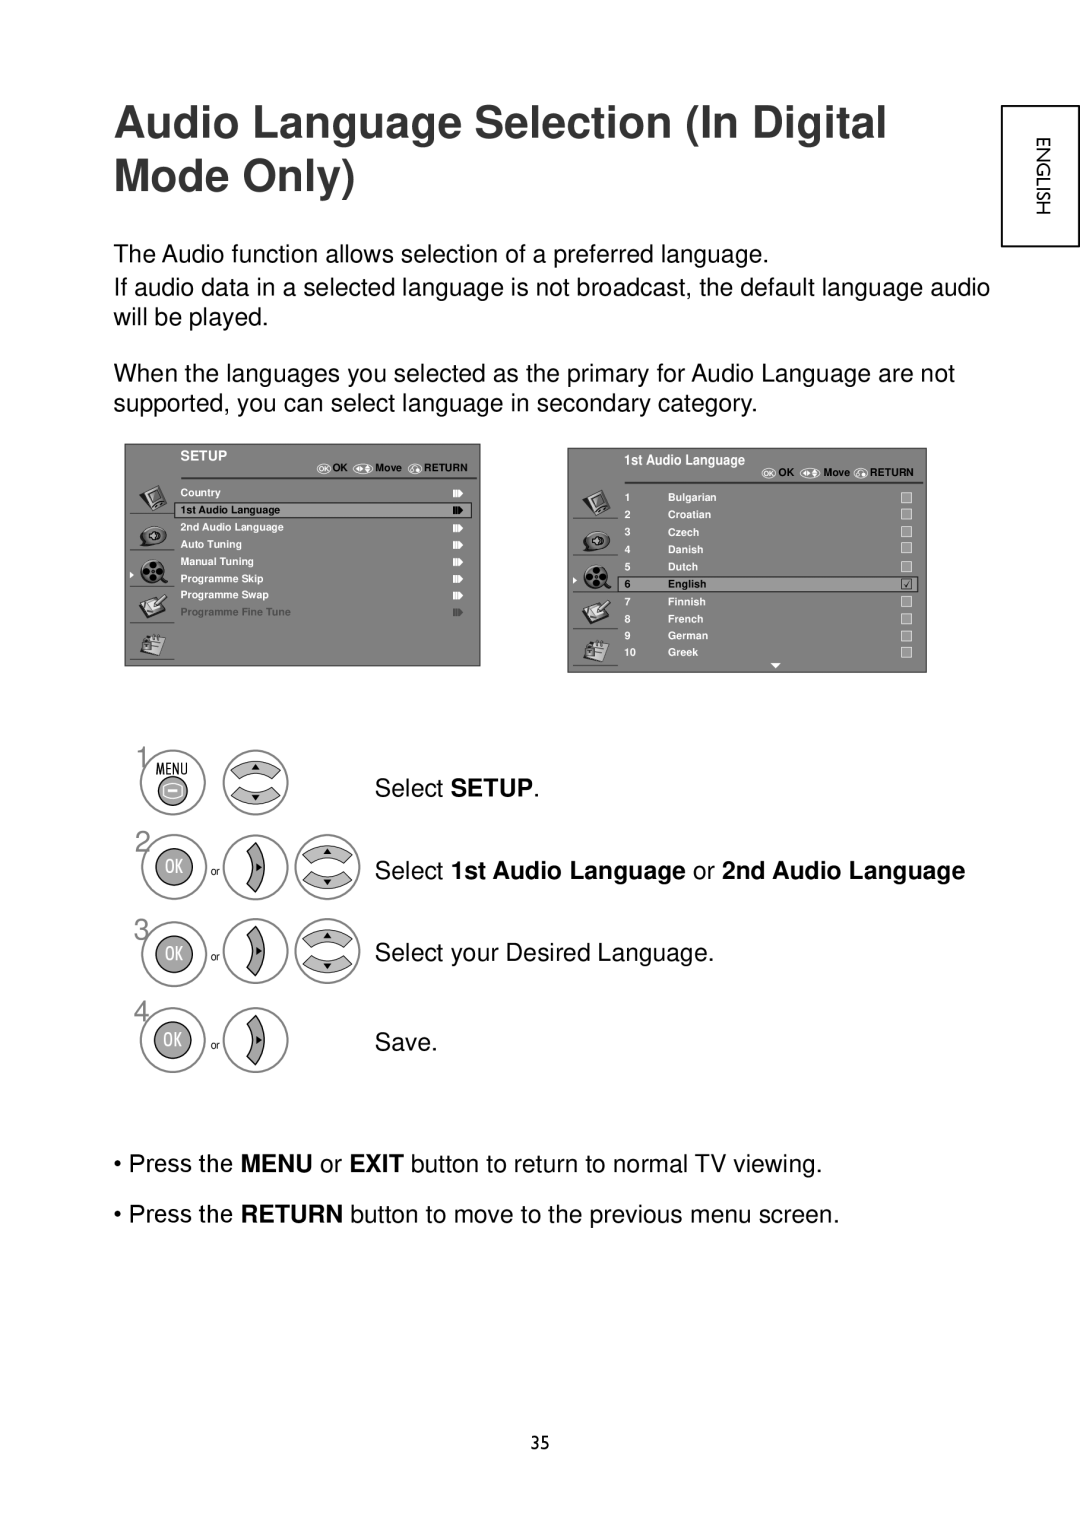 Hitachi 32LD4550U Audio Language Selection In Digital Mode Only, Select 1st Audio Language or 2nd Audio Language 